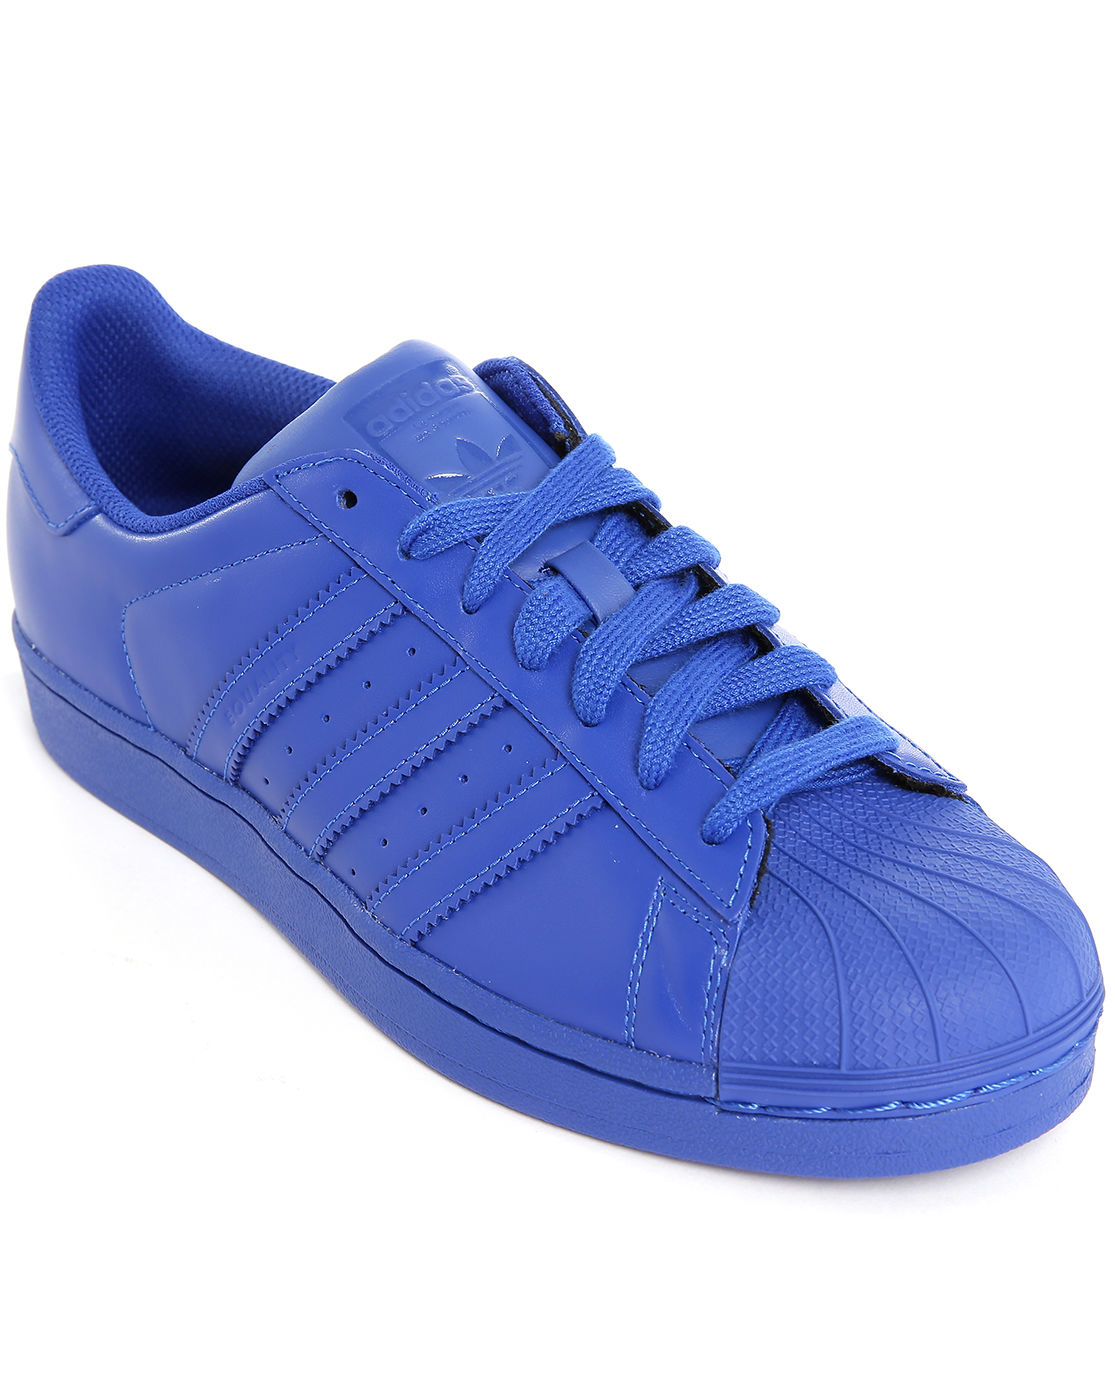 Adidas originals Superstar Supercolor Blue Sneakers in Blue for Men | Lyst